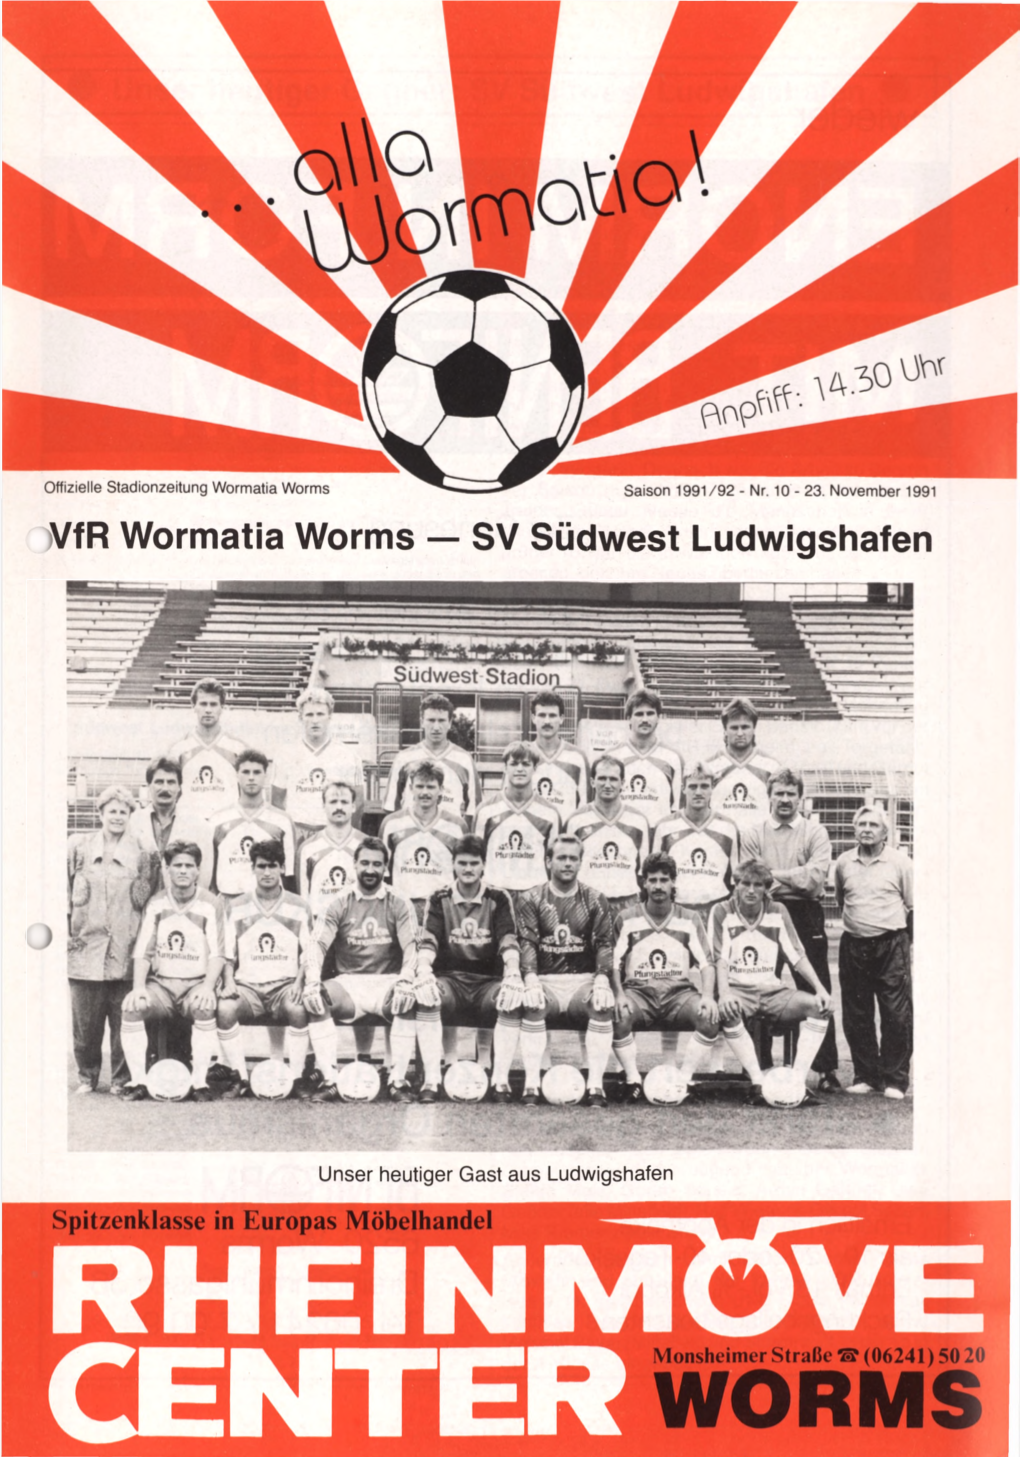 Vfr Wormatia Worms — SV Südwest Ludwigshafen